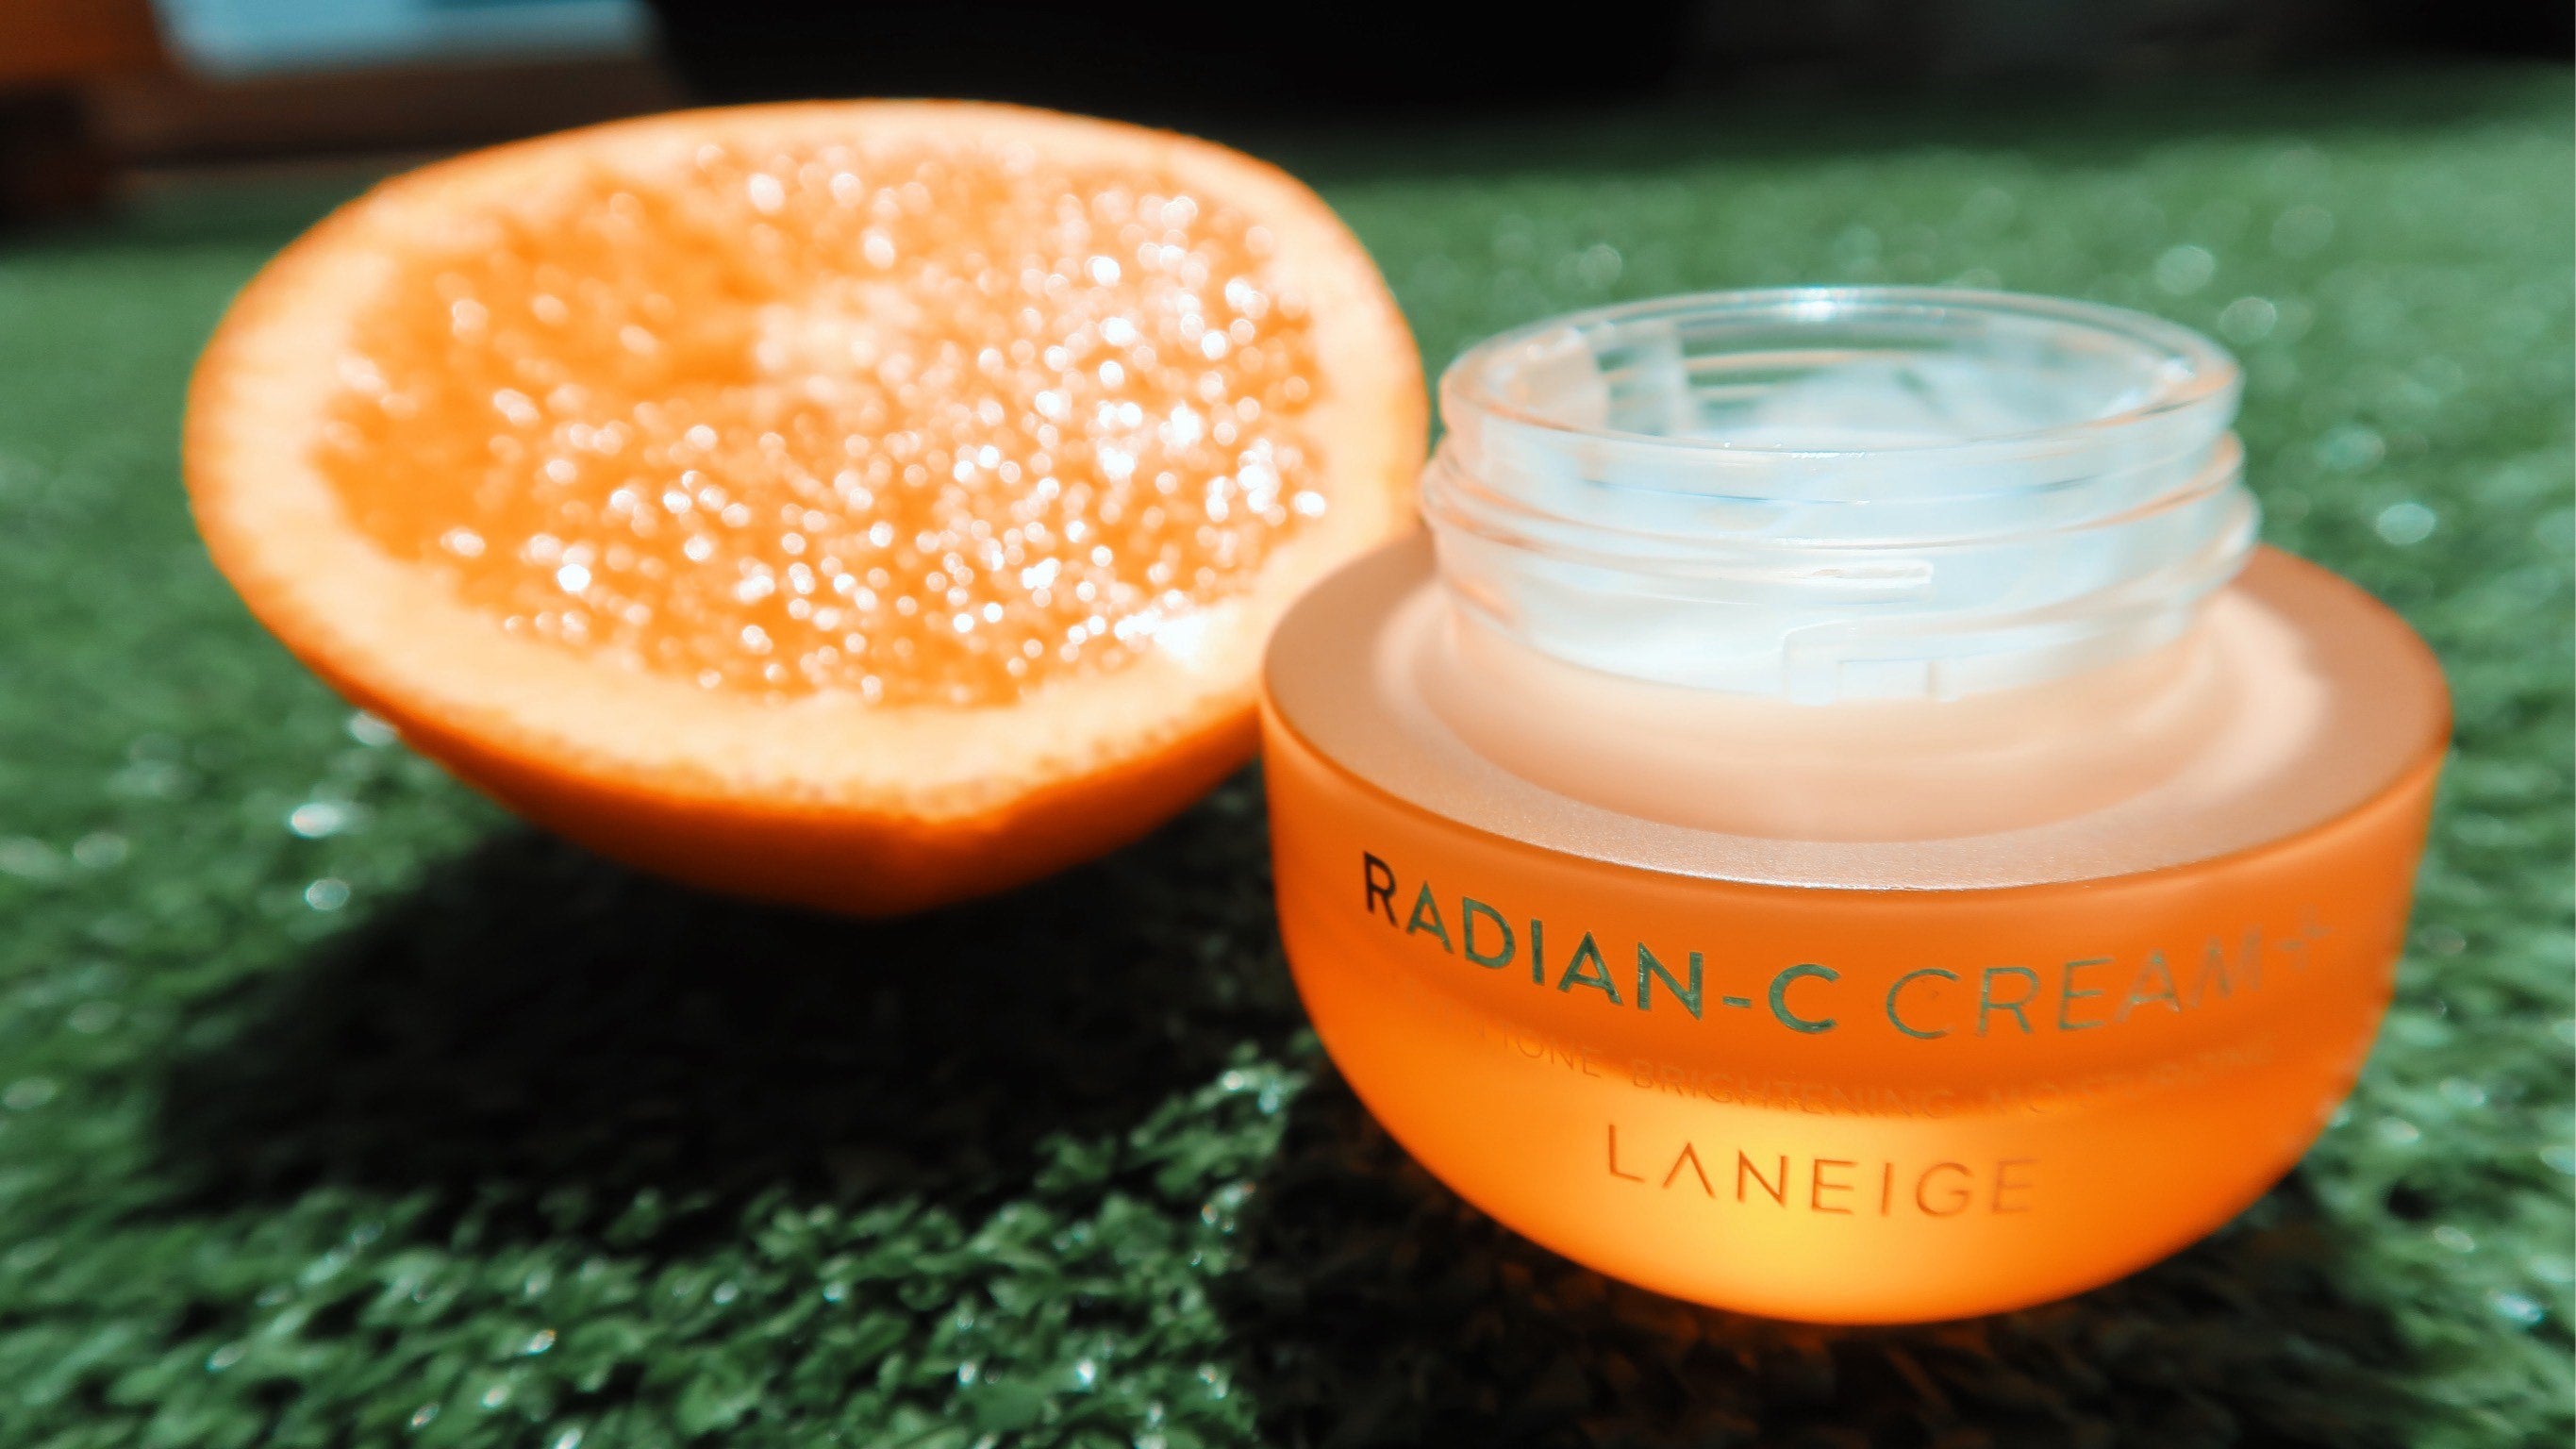 HI-REVIEW: Laneige Radian-C Cream